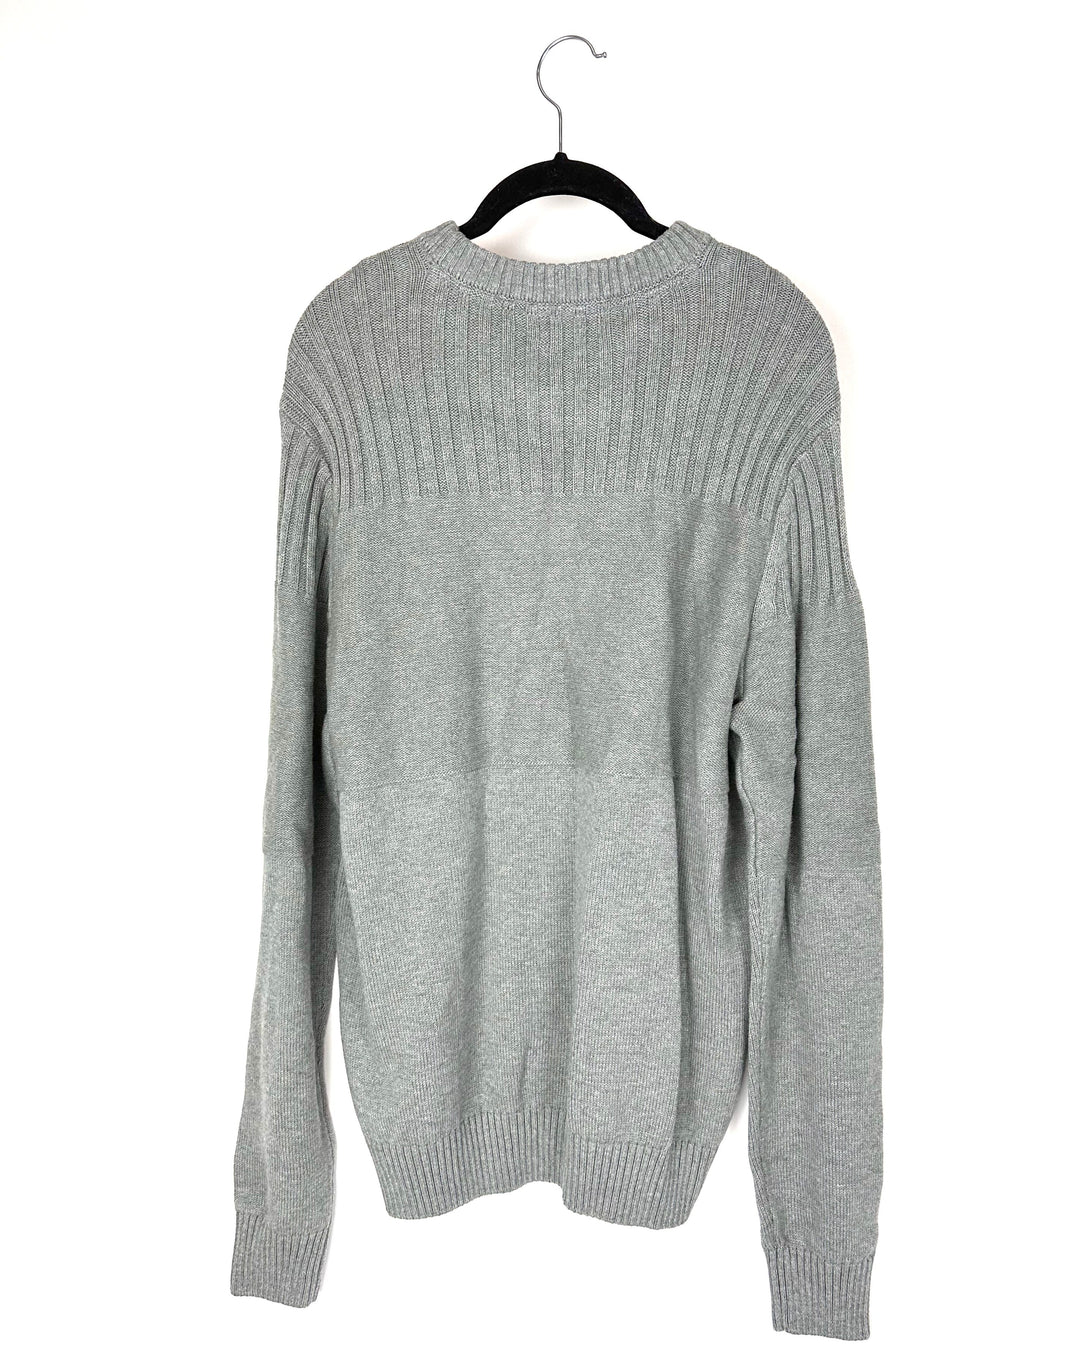 MENS DKNY Gray Knitted Sweater - Medium